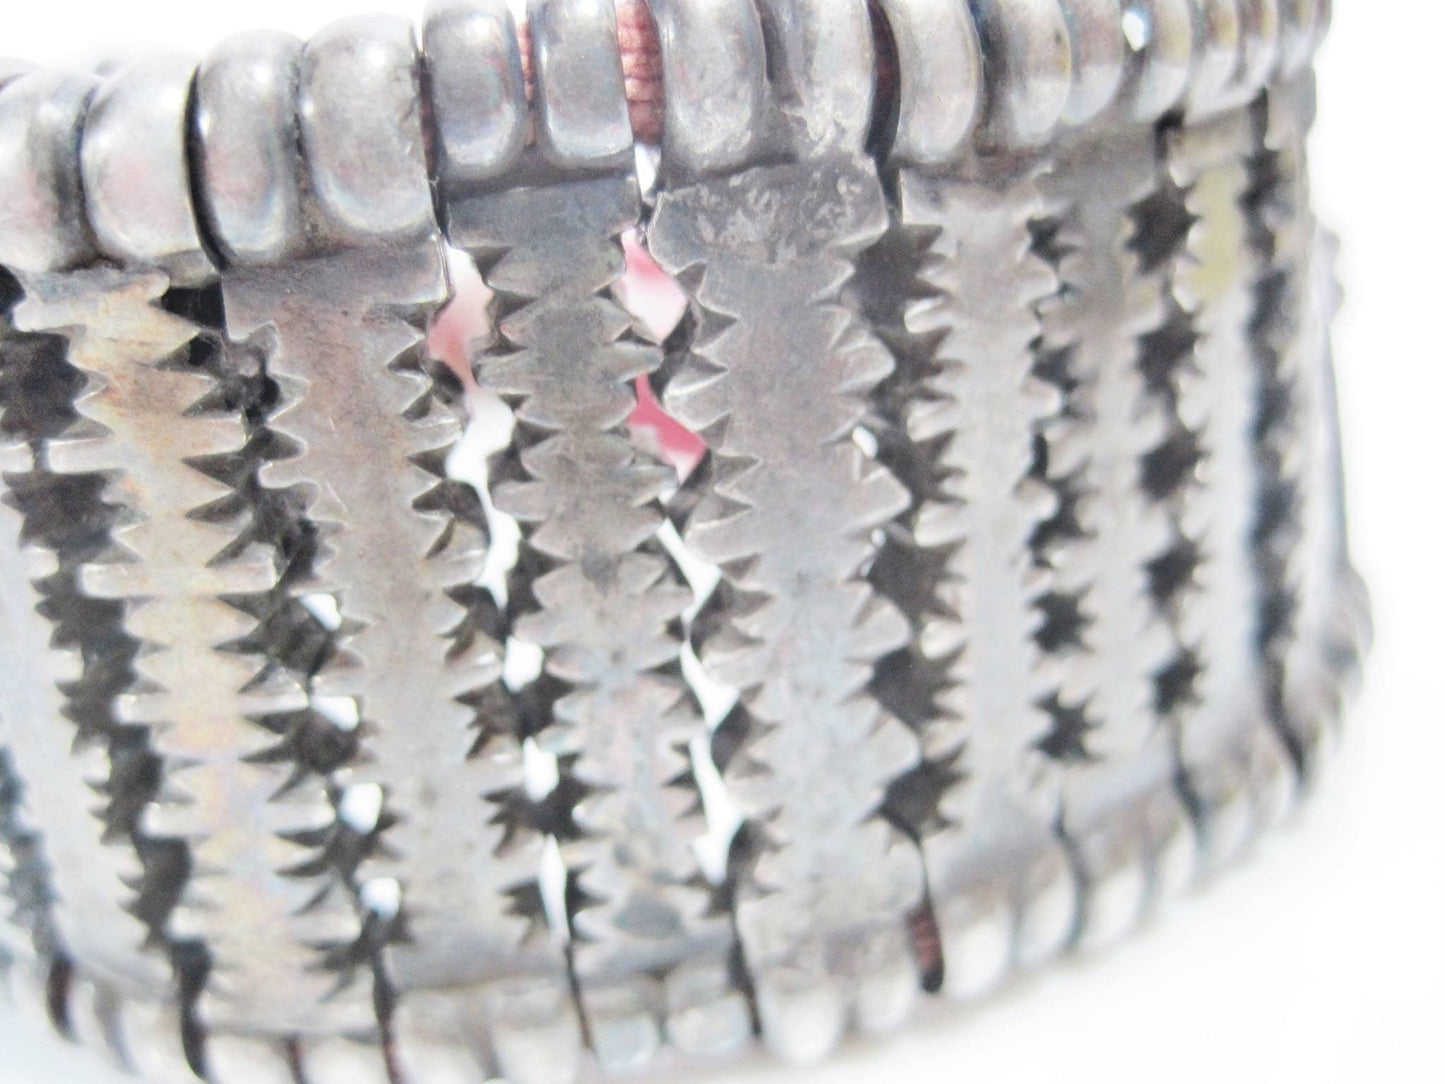 Vintage Indian Silver Bracelet from Rajasthan - Anteeka